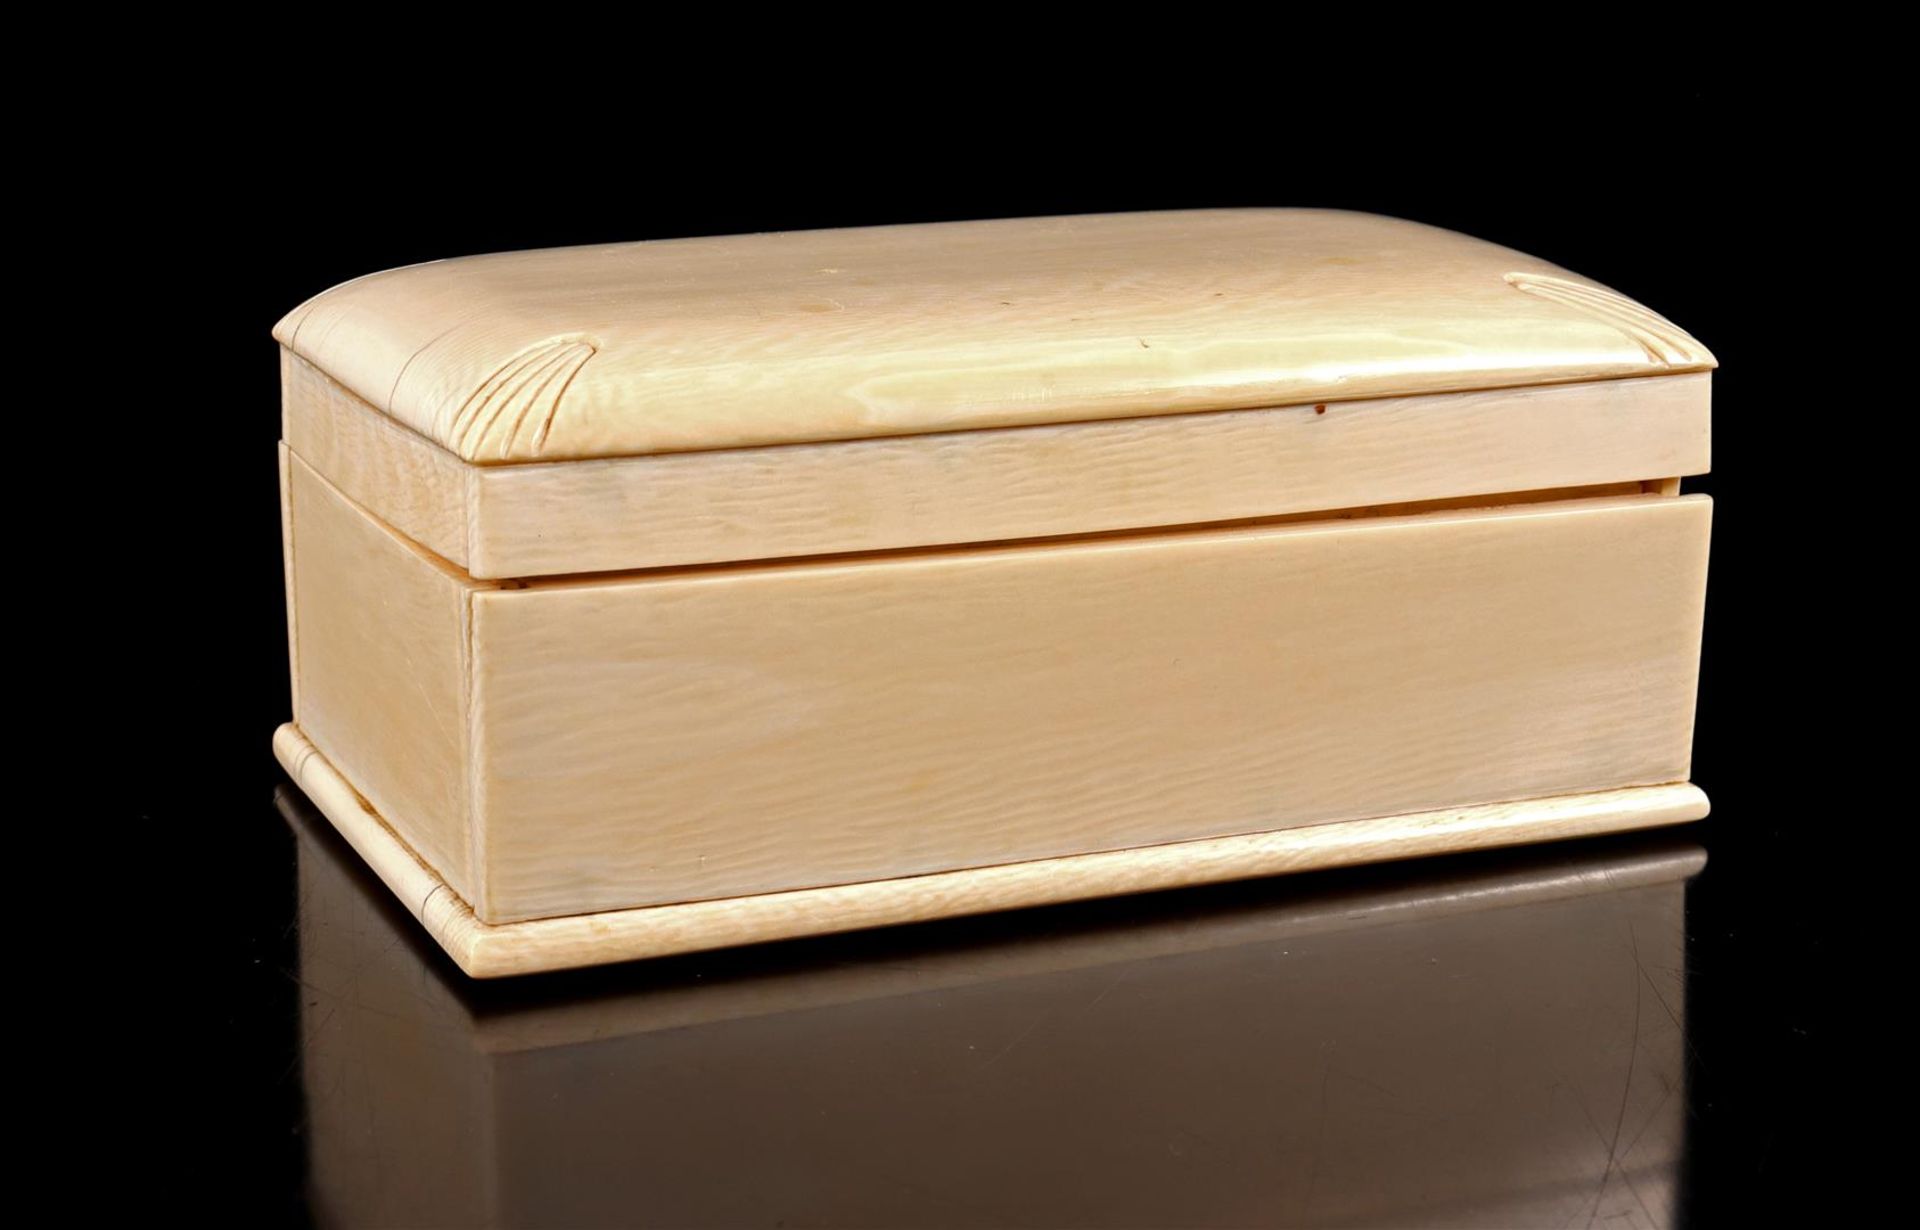 Rectangular ivory box with lid